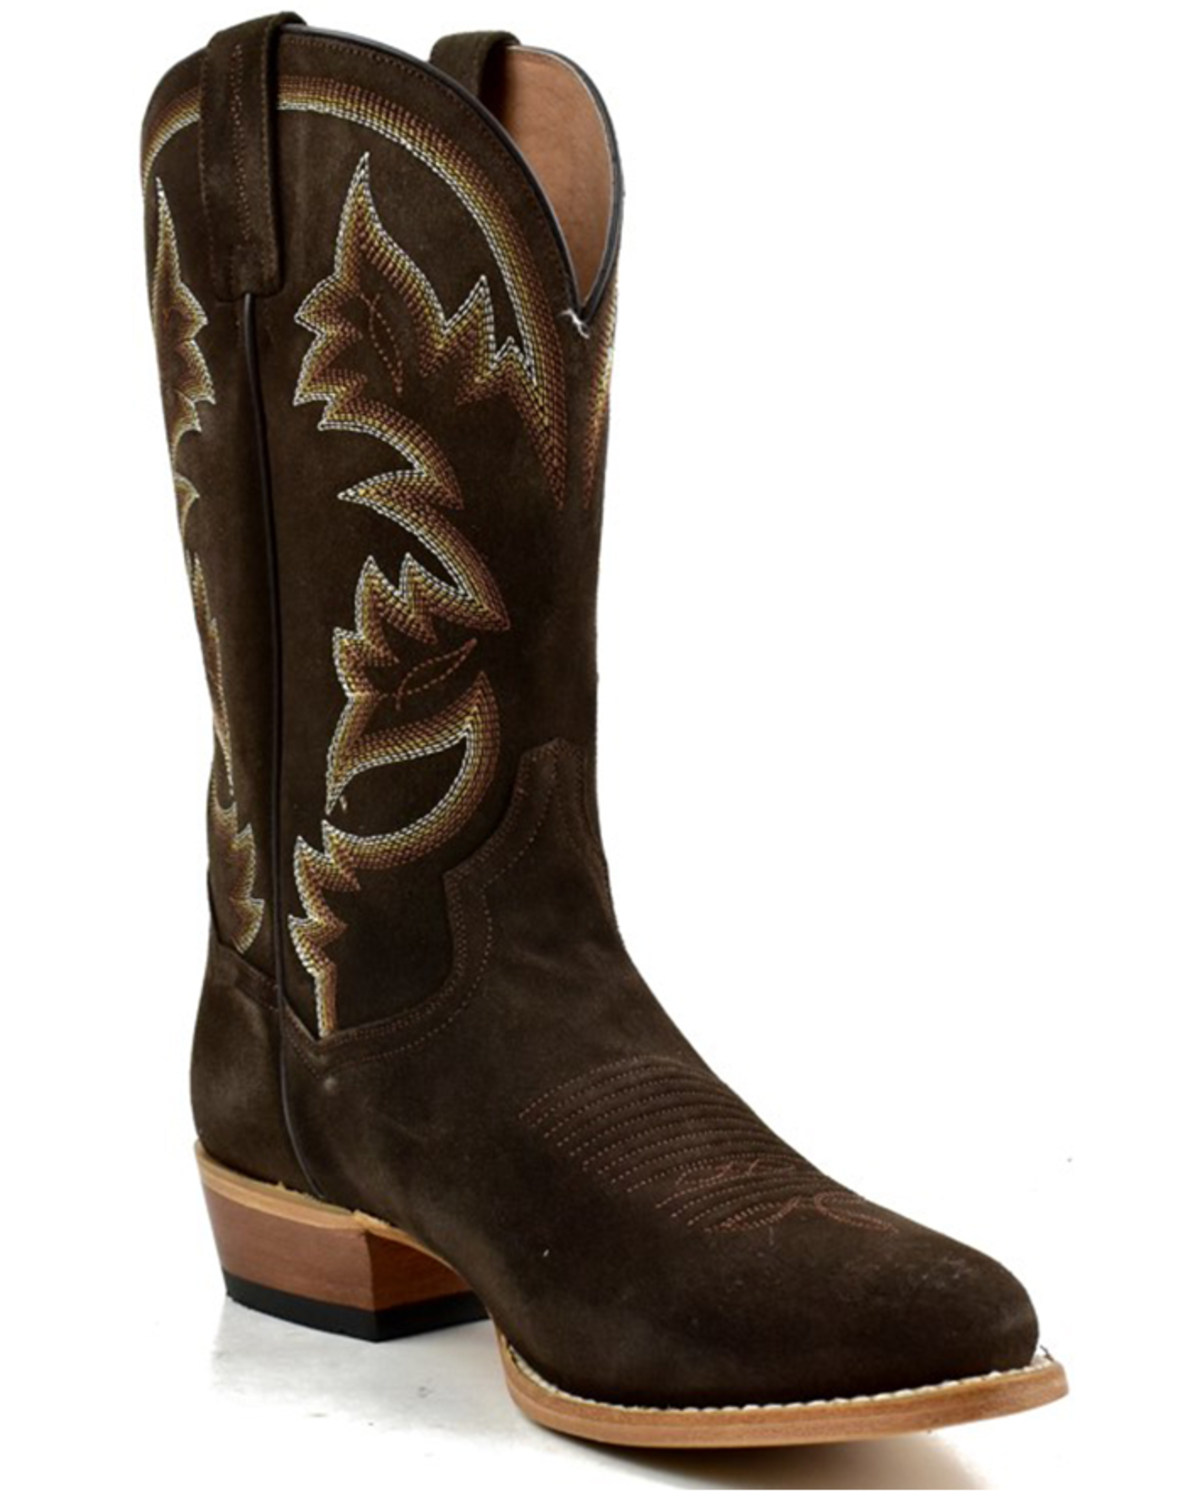 Dan Post Men's Becker Western Boots - Medium Toe